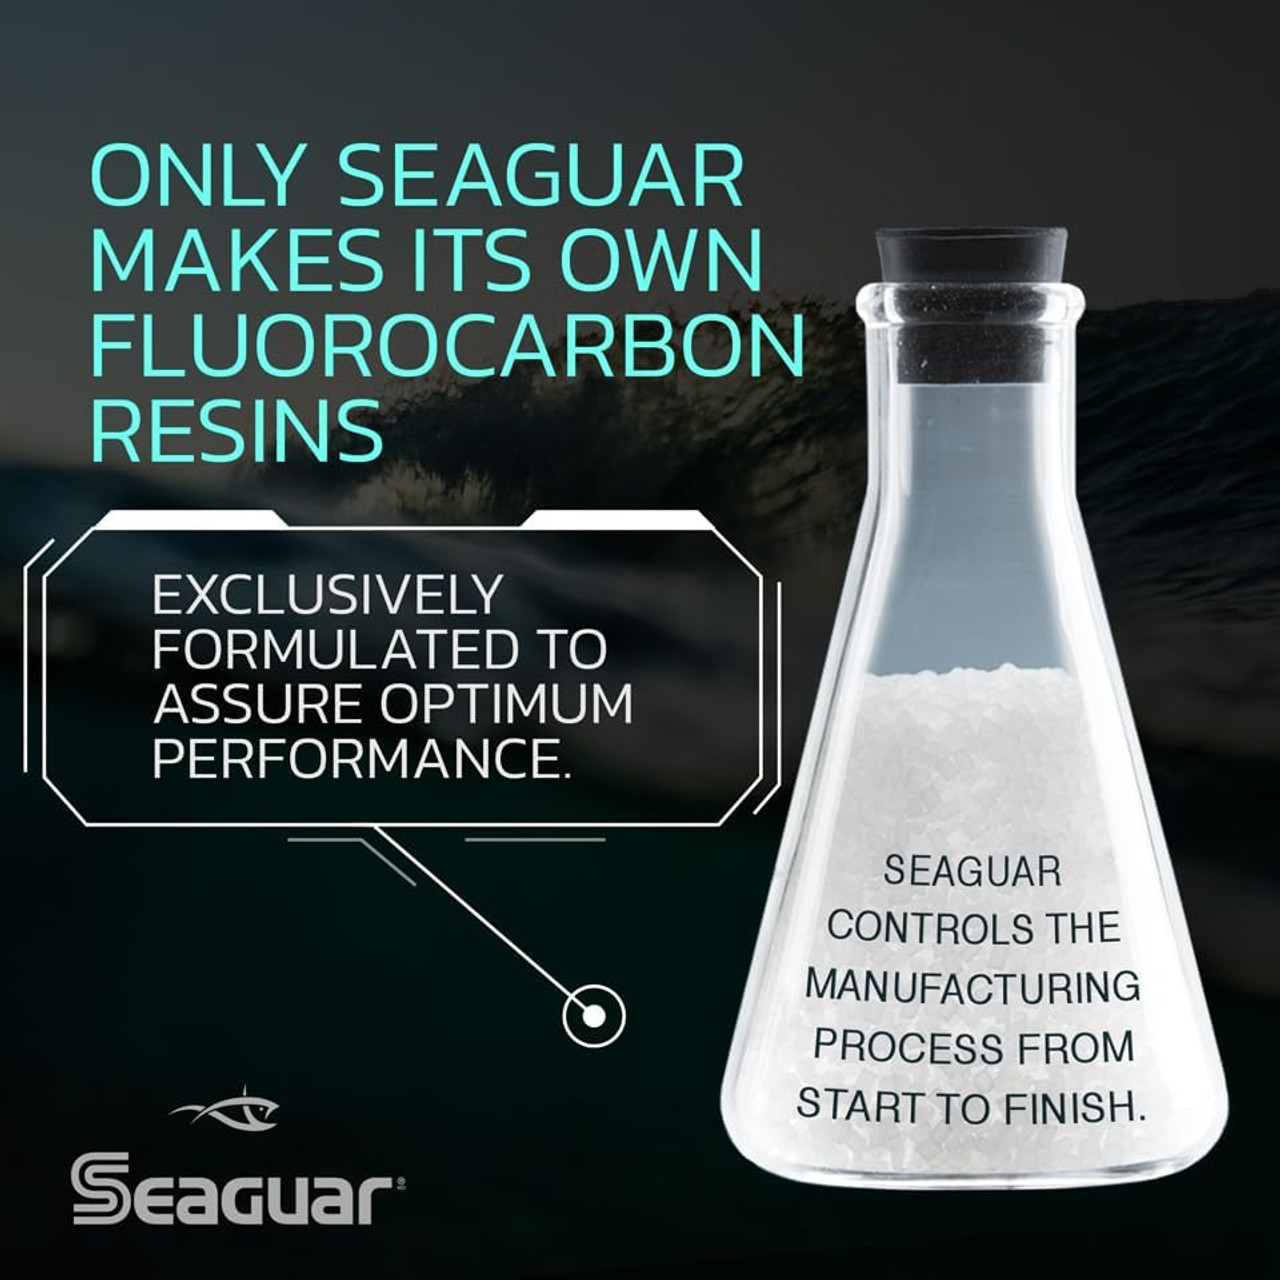 Seaguar Big Game Blue Label 100% Fluorocarbon Leader 32.8yr/30m 400-Pound